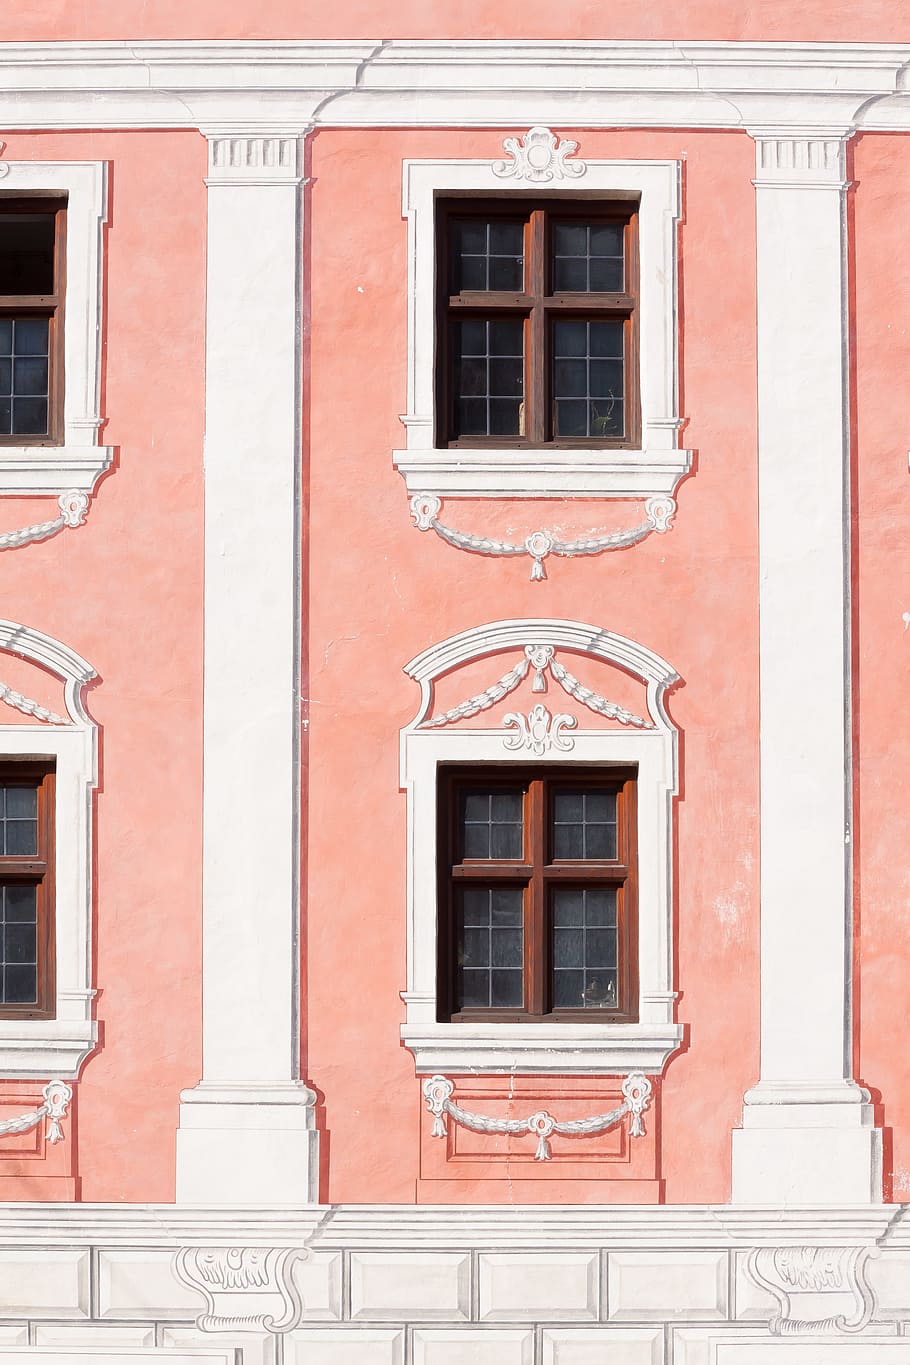 fasad, merah muda kehitaman, jendela, lukisan, putih, dekorasi, rumah, bangunan, arsitektur, hauswand